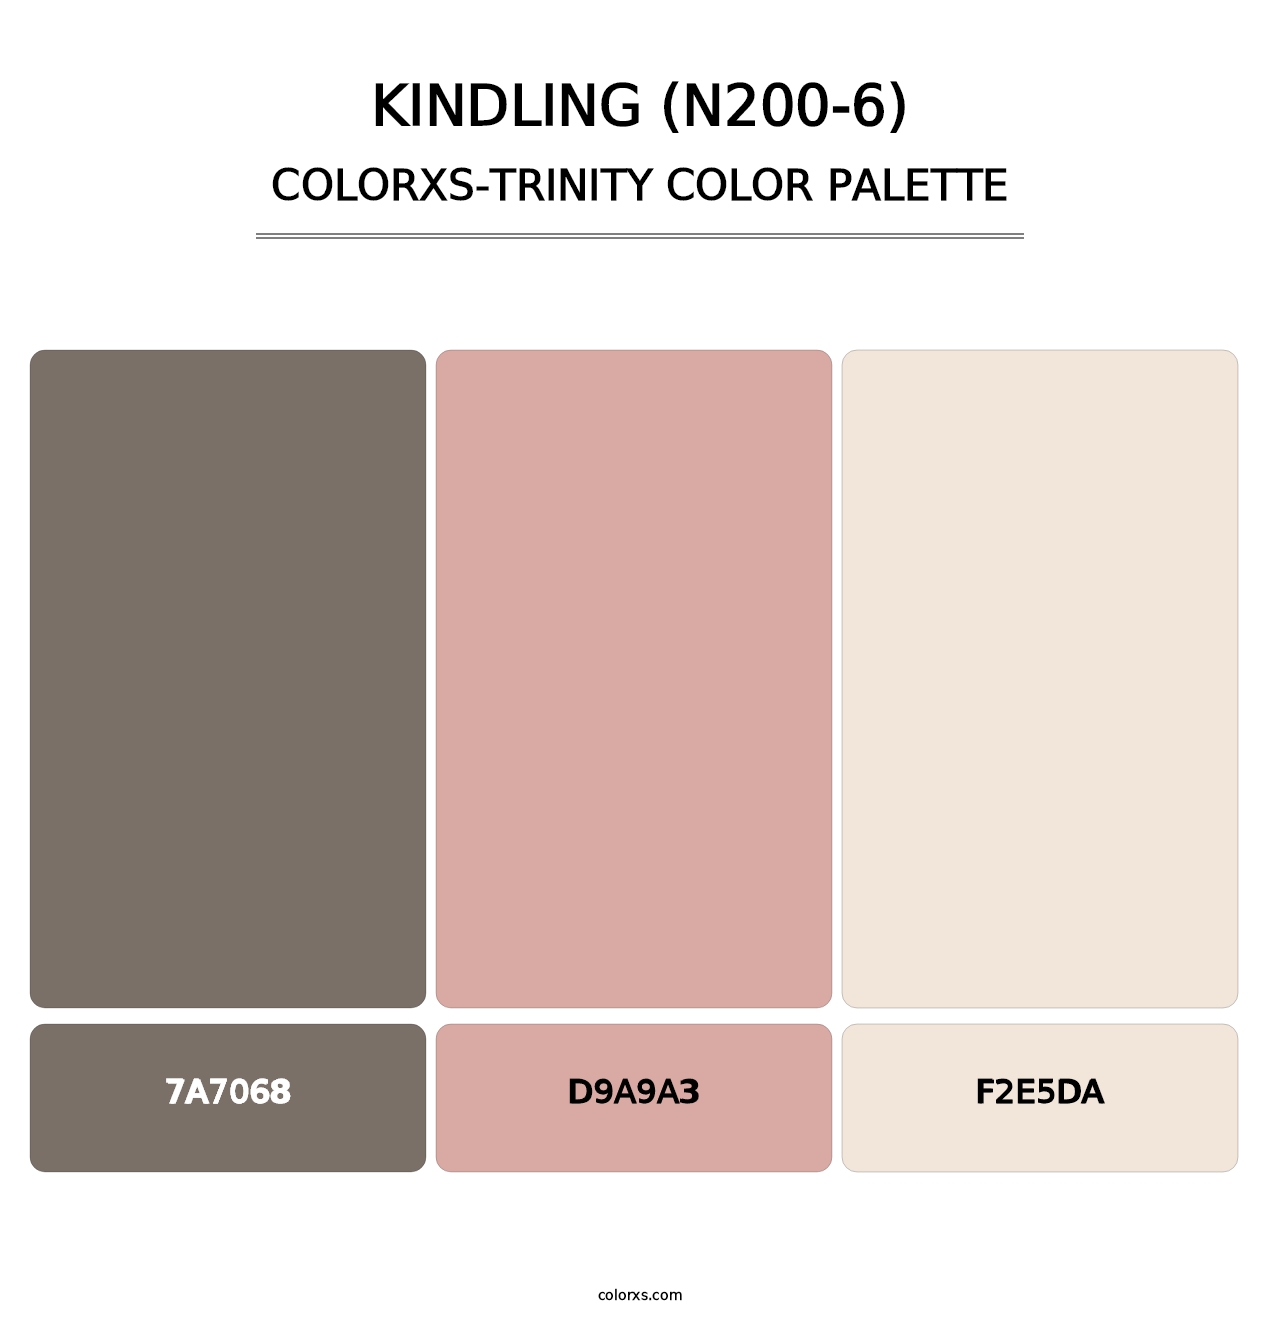 Kindling (N200-6) - Colorxs Trinity Palette